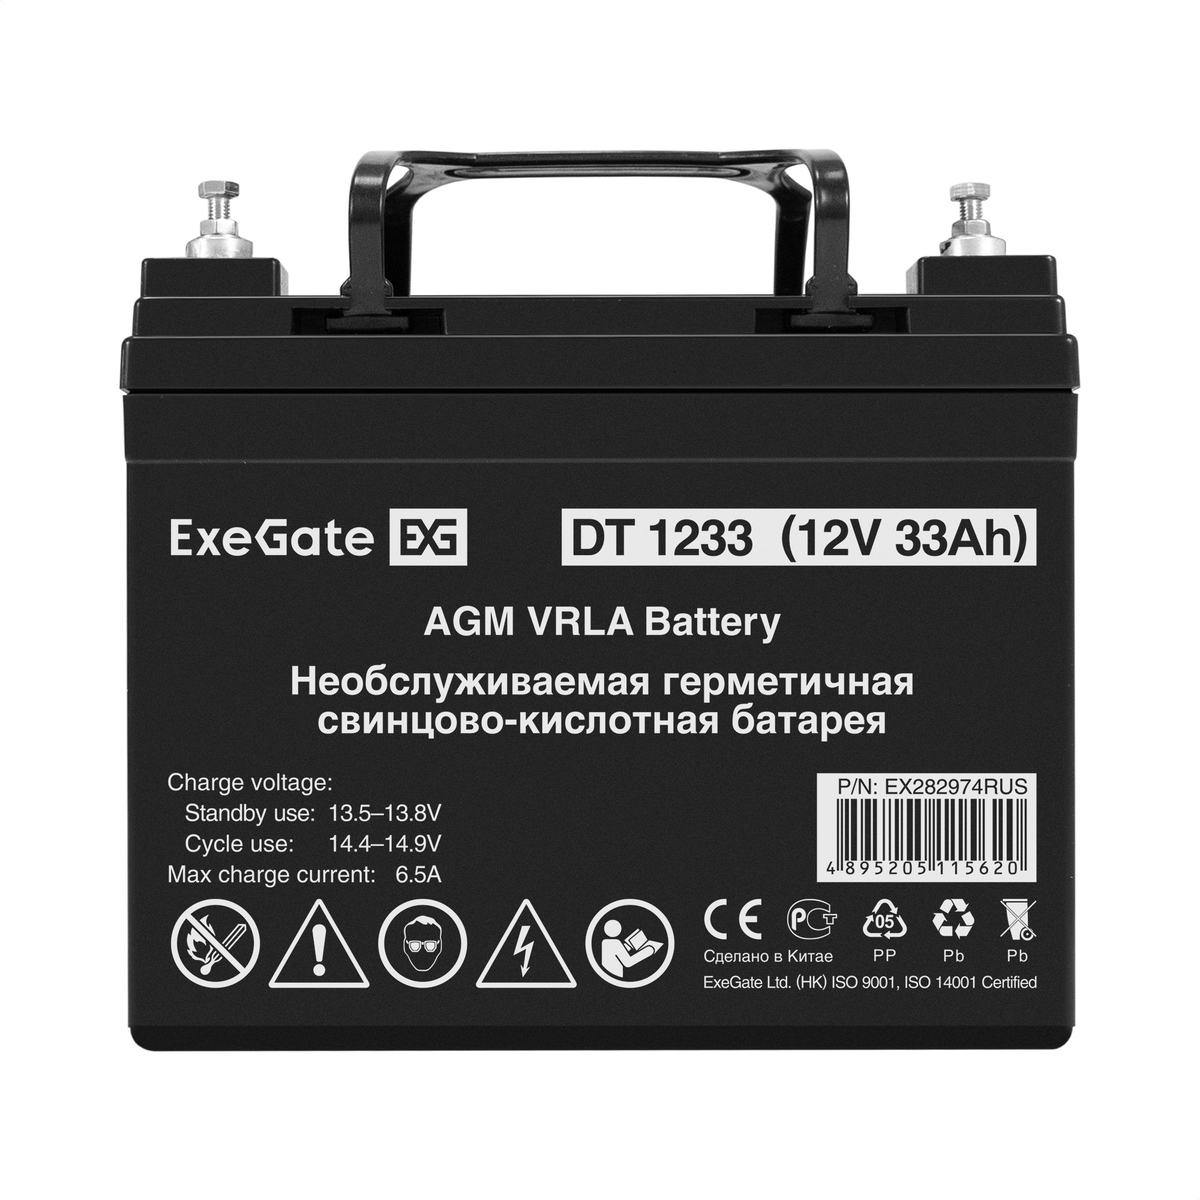 Battery ExeGate DT 1233